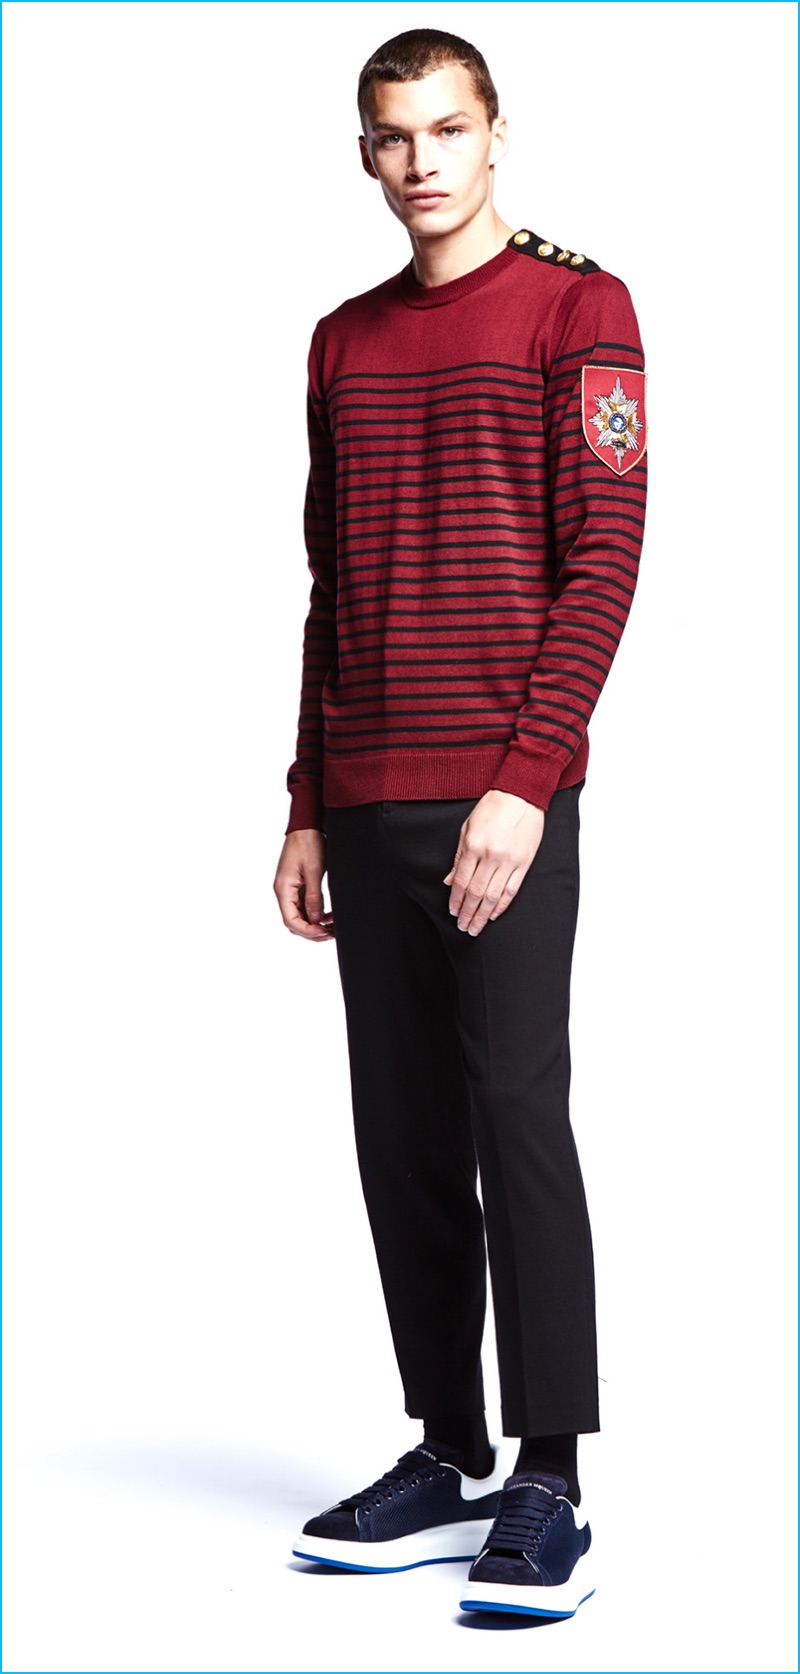 Louis Mayhew wears Laboratory striped burgundy naval sweater.